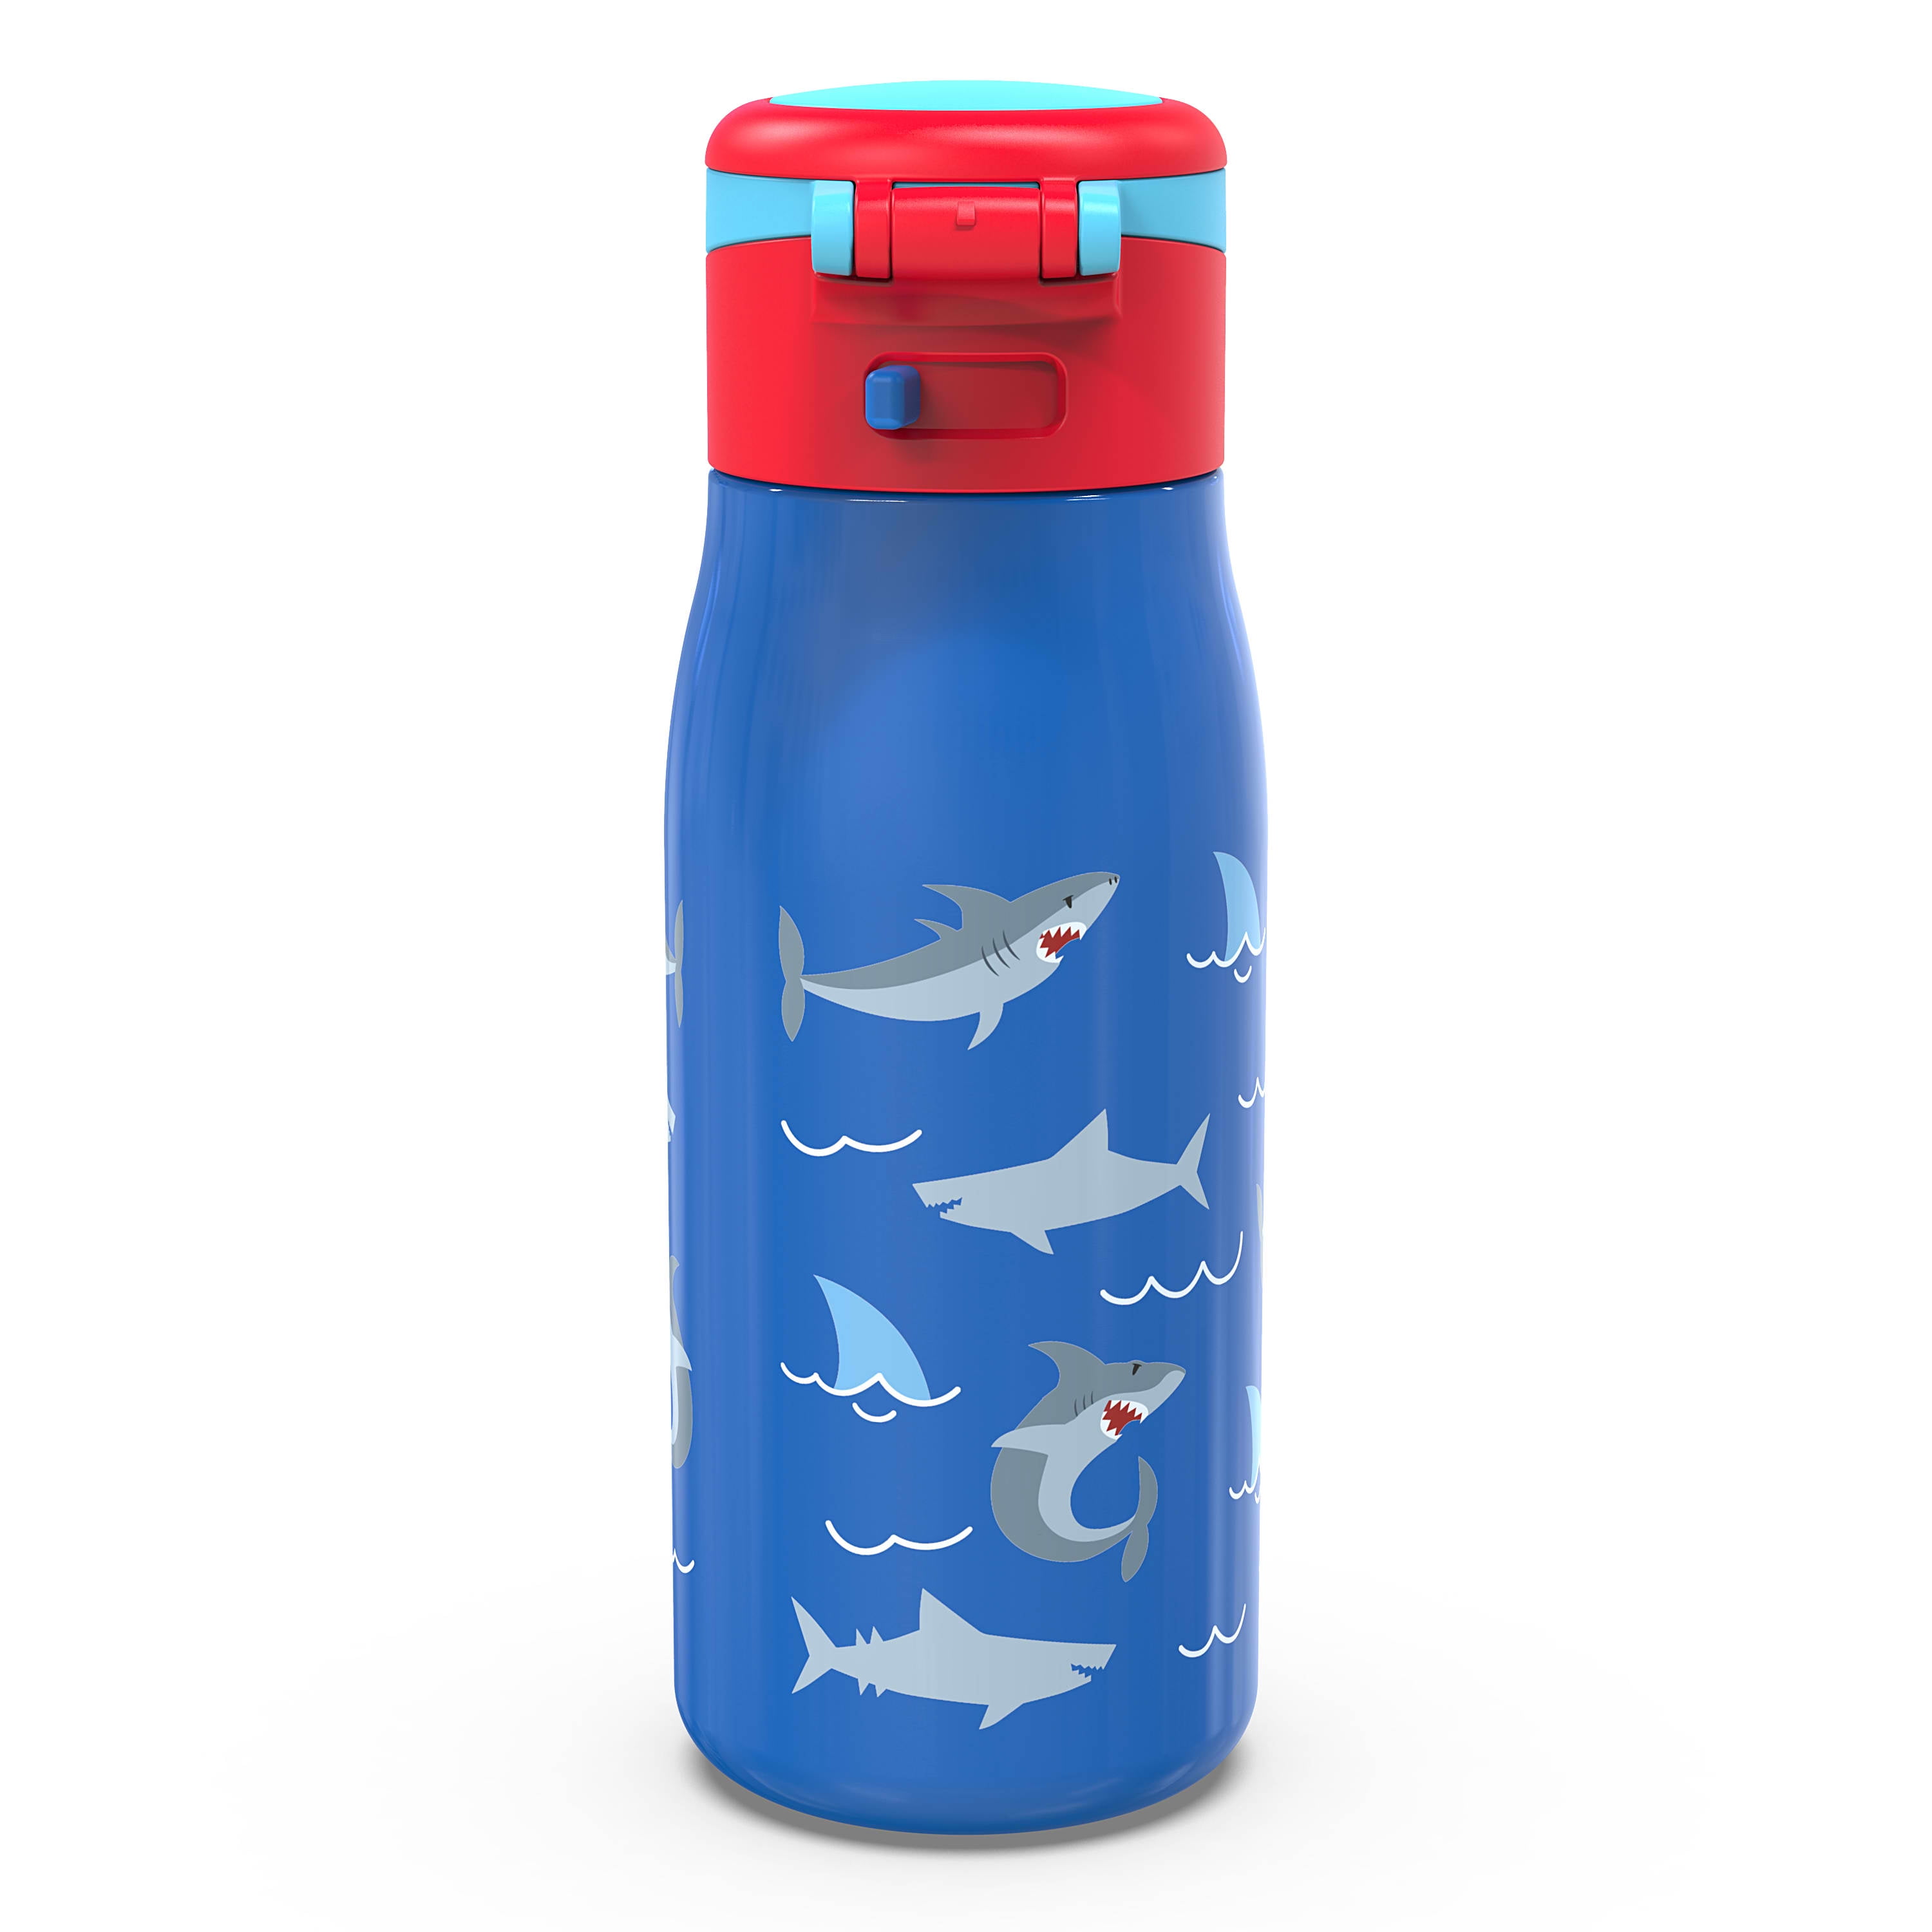 MuzeMerch - Oklahoma Aquarium Shark Logo Water Bottle